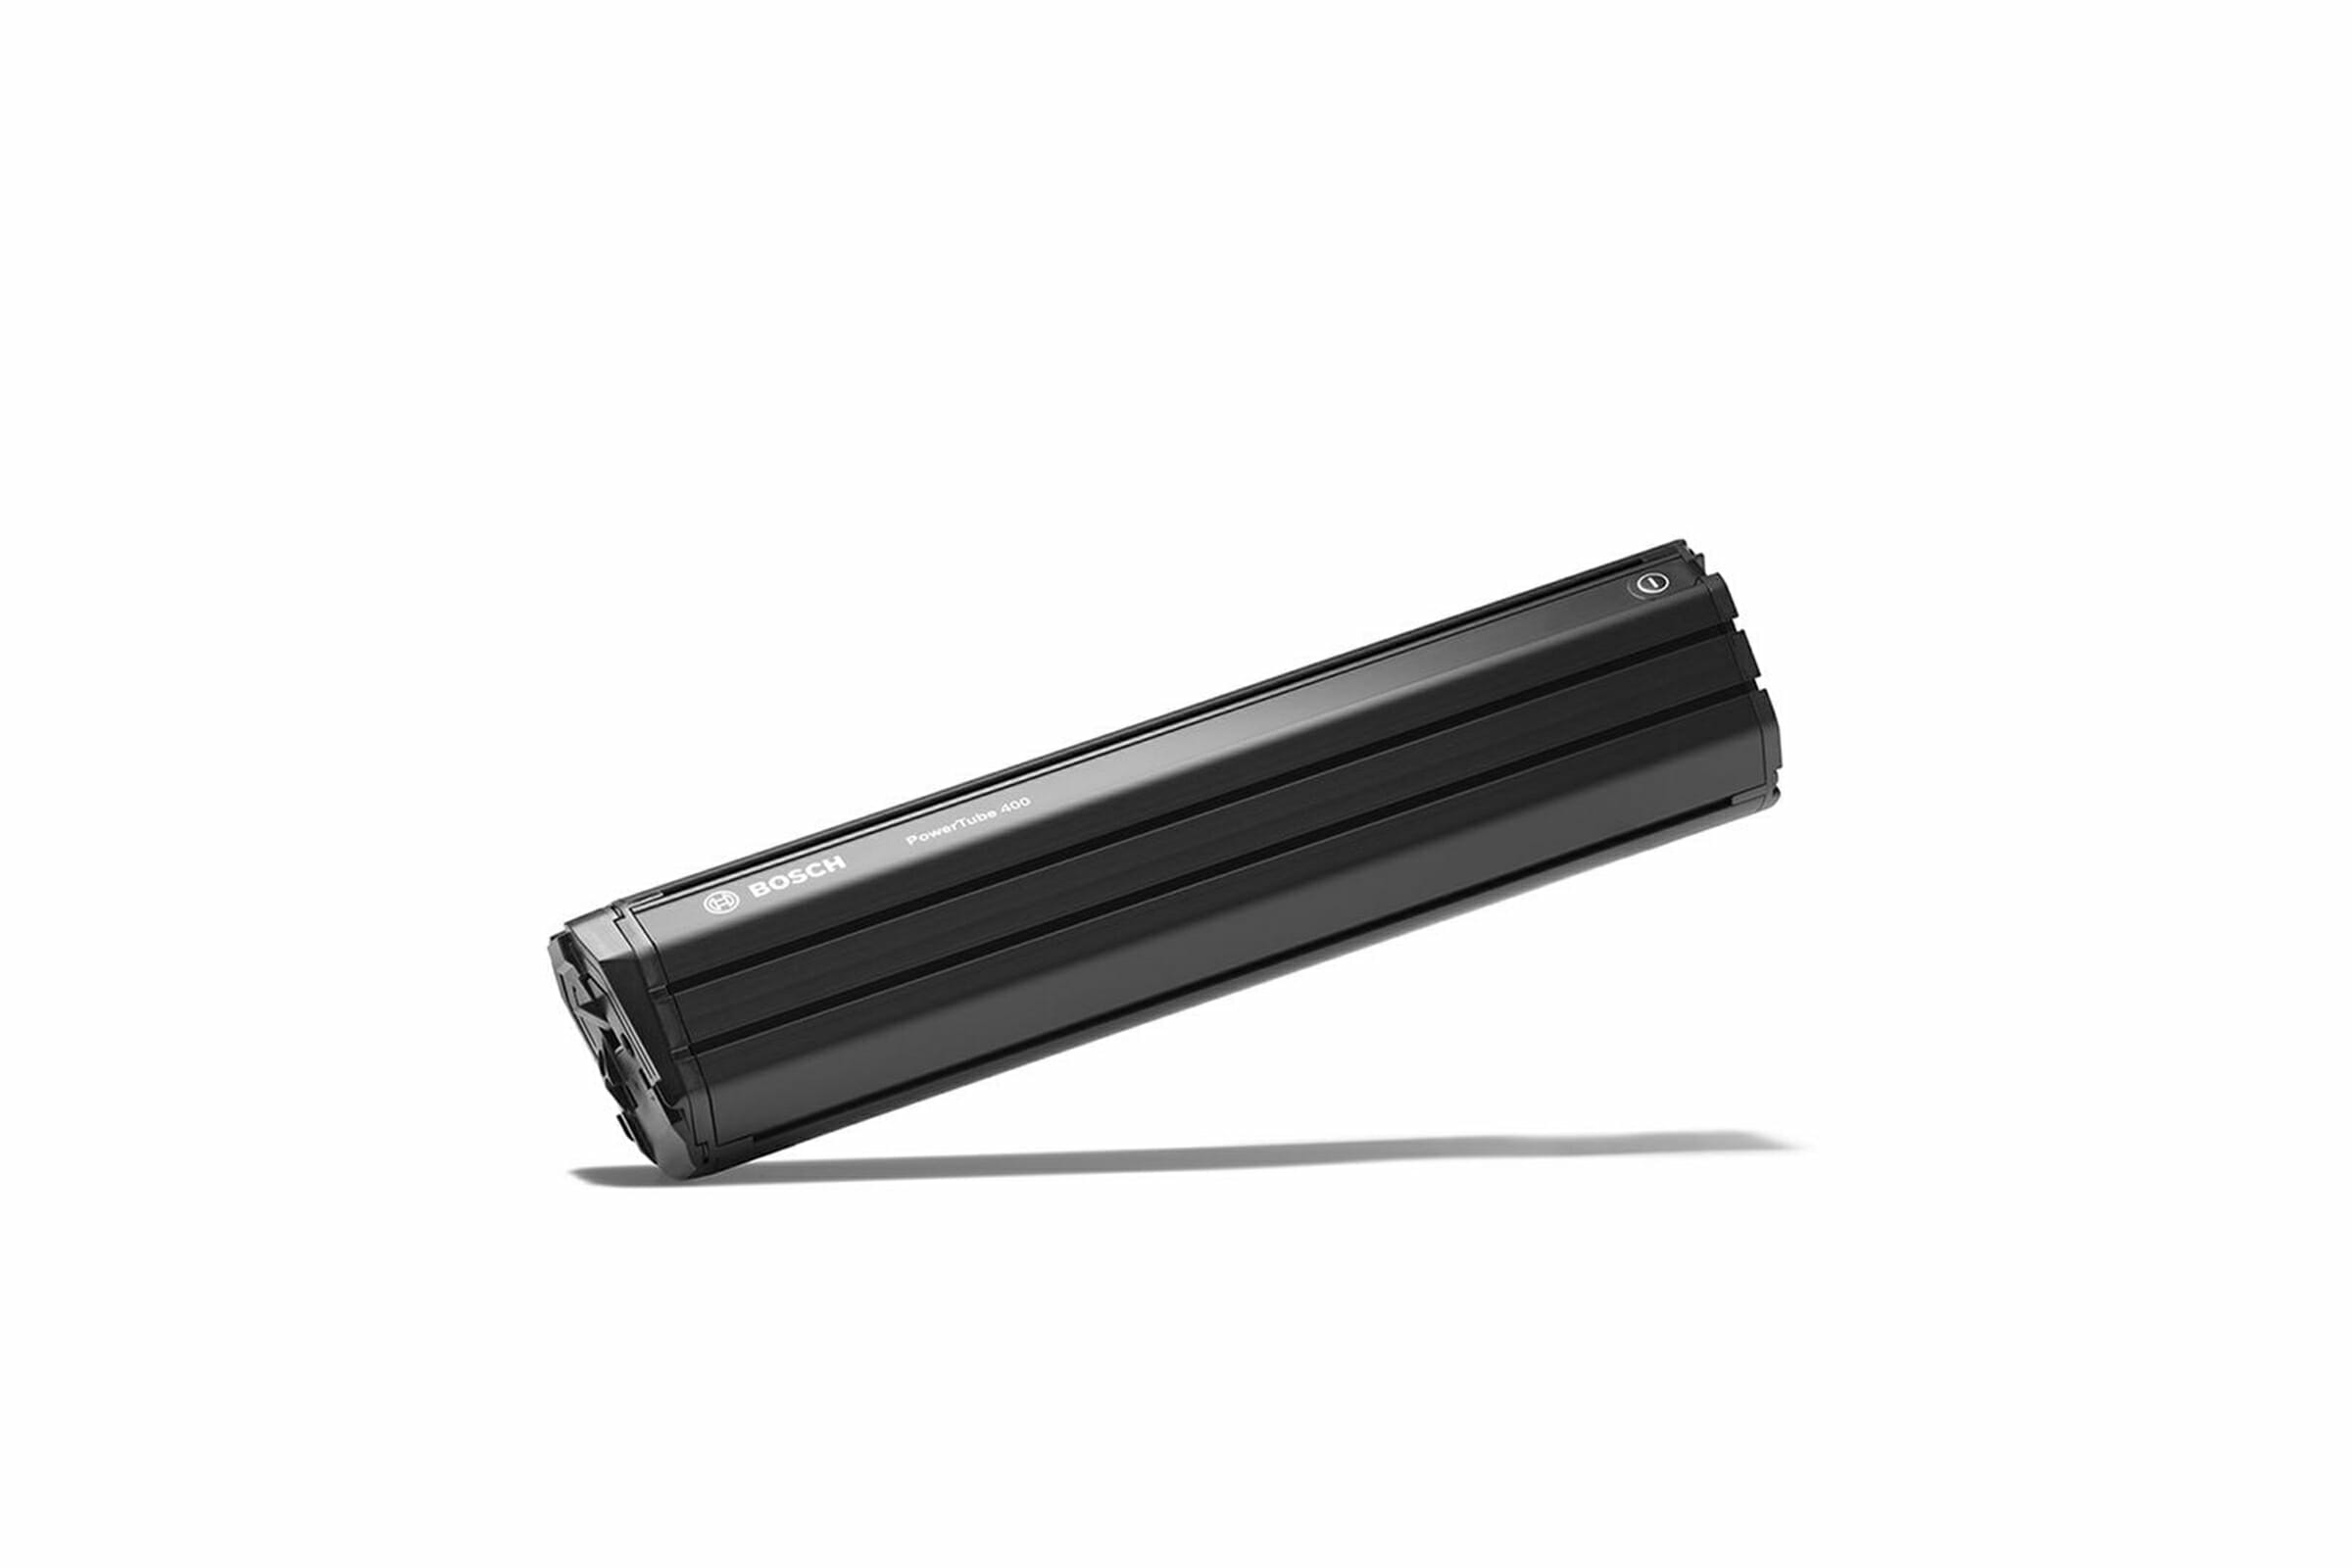 Bosch PowerTube Batteri 400Wh Vertikal (BBP283)  Svart Cykeldelar - Batterier & laddare - Batterier